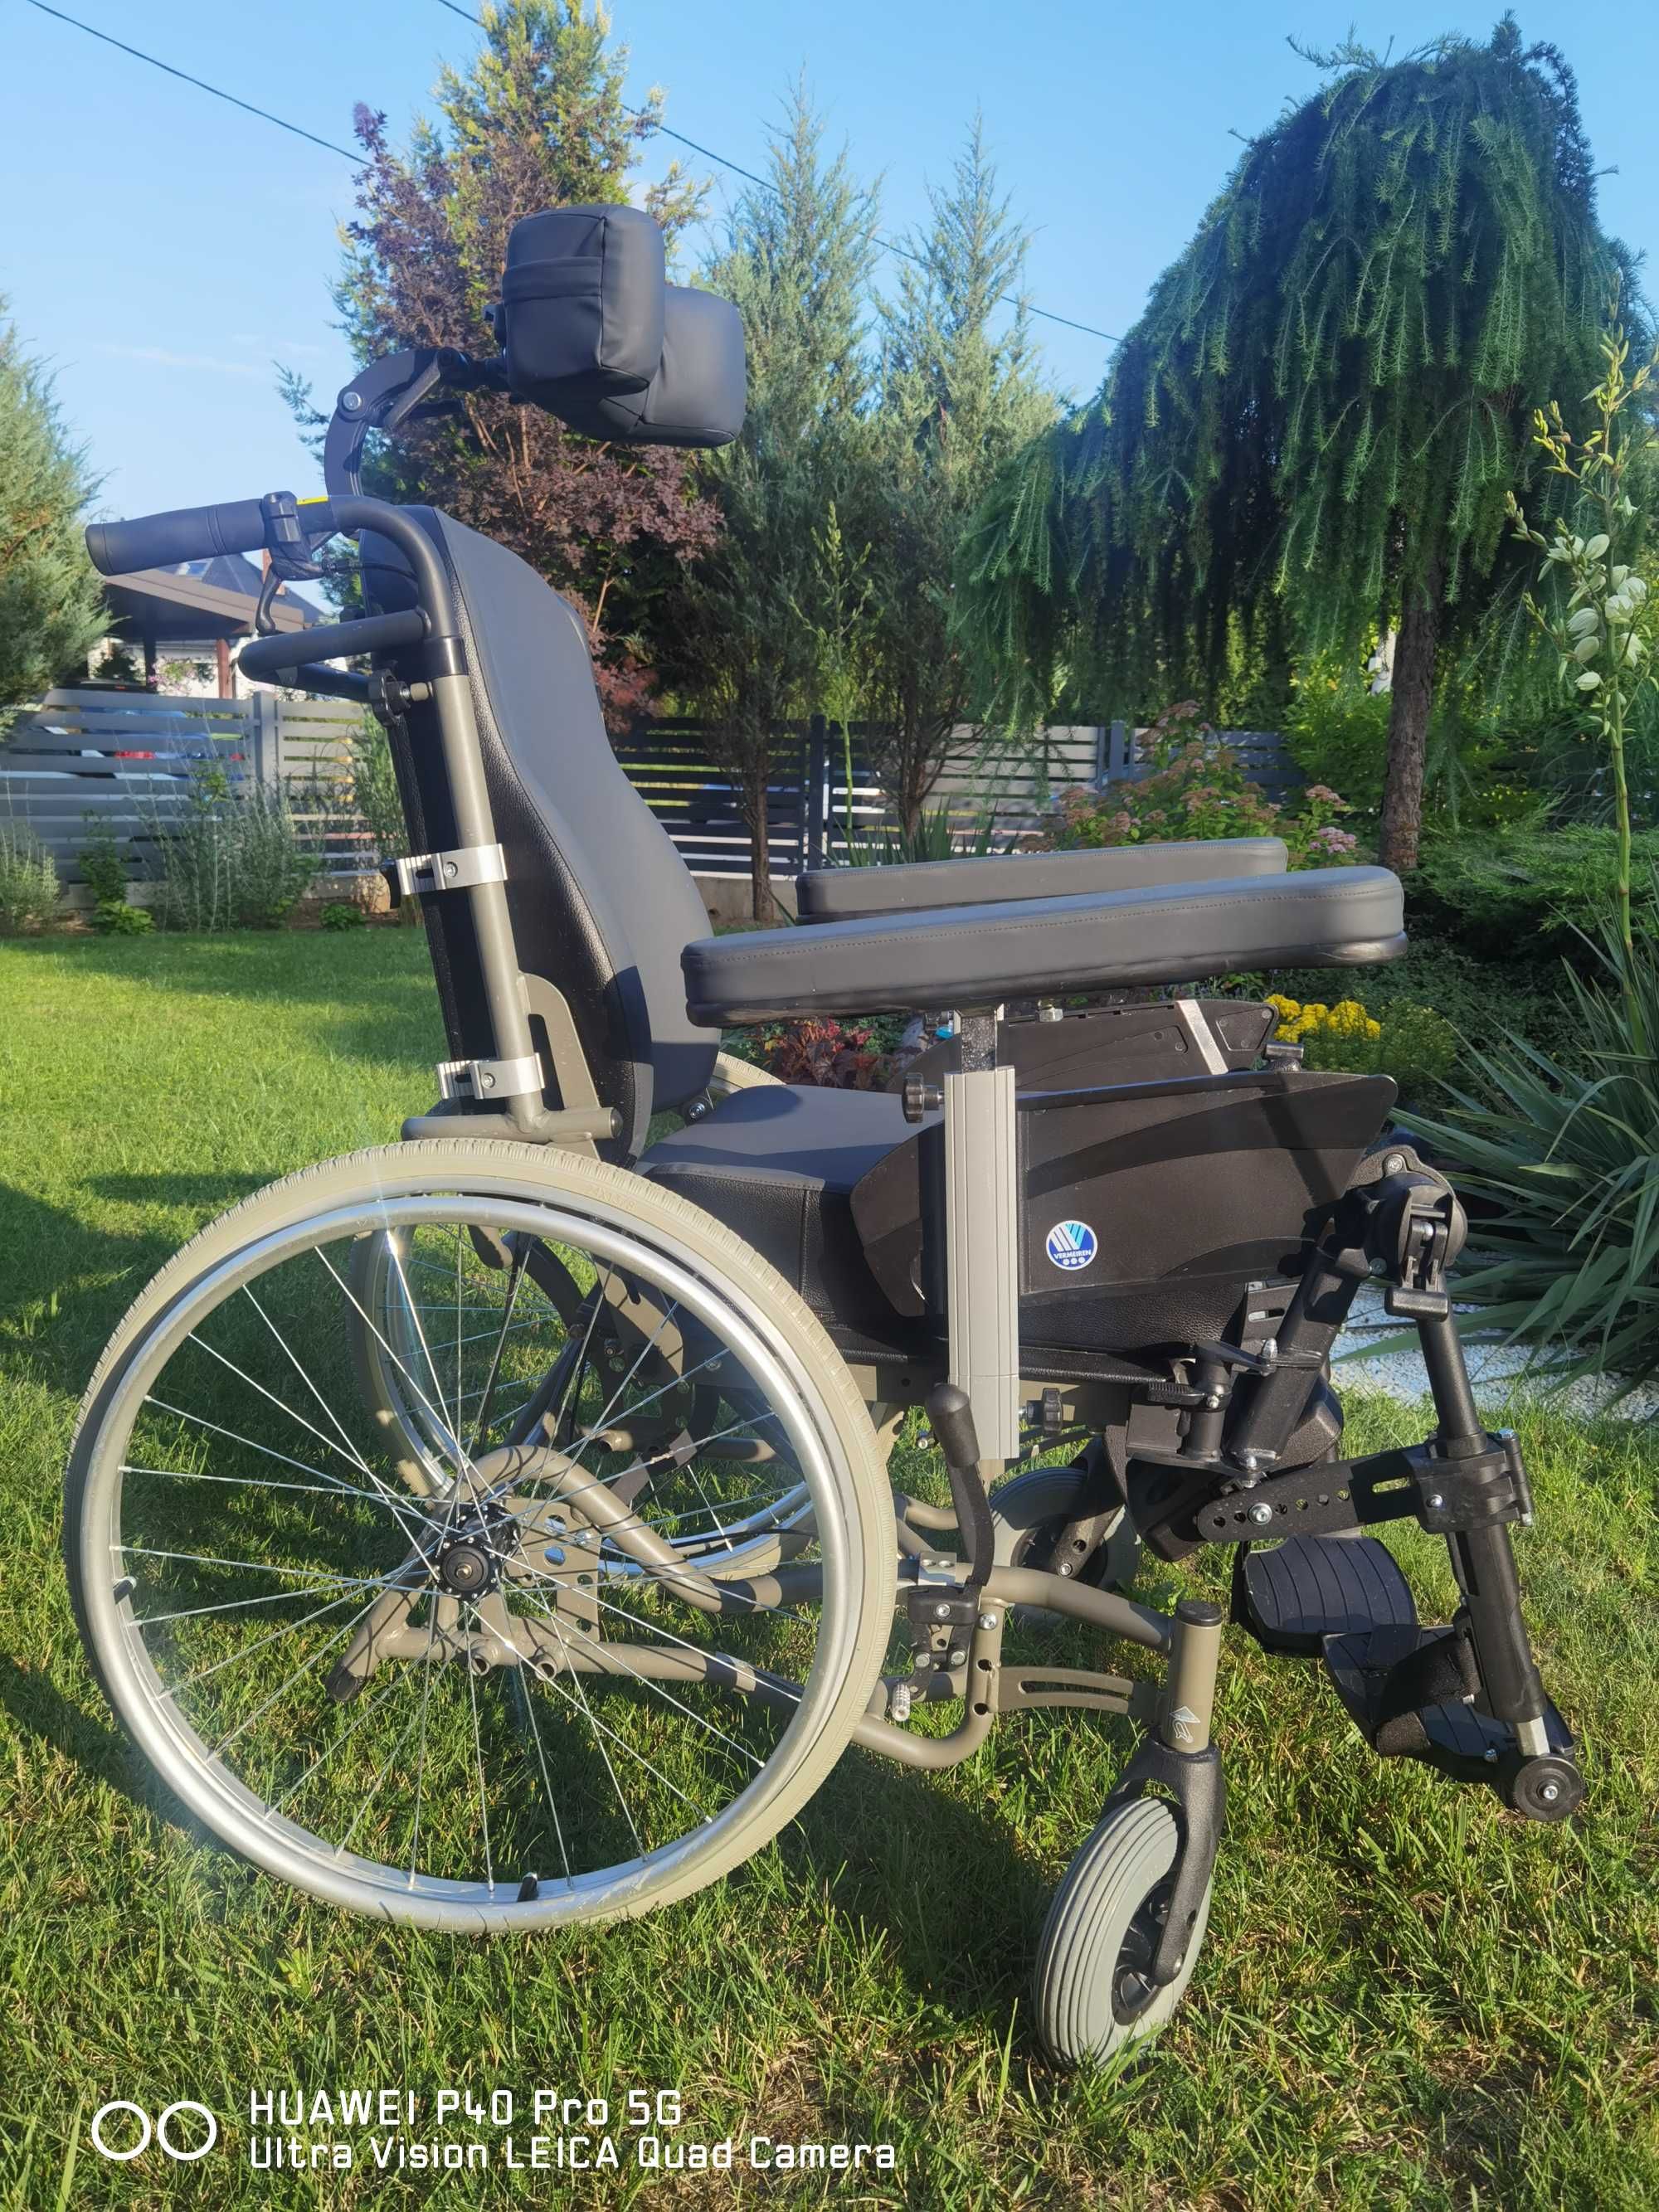 Wózek inwalidzki